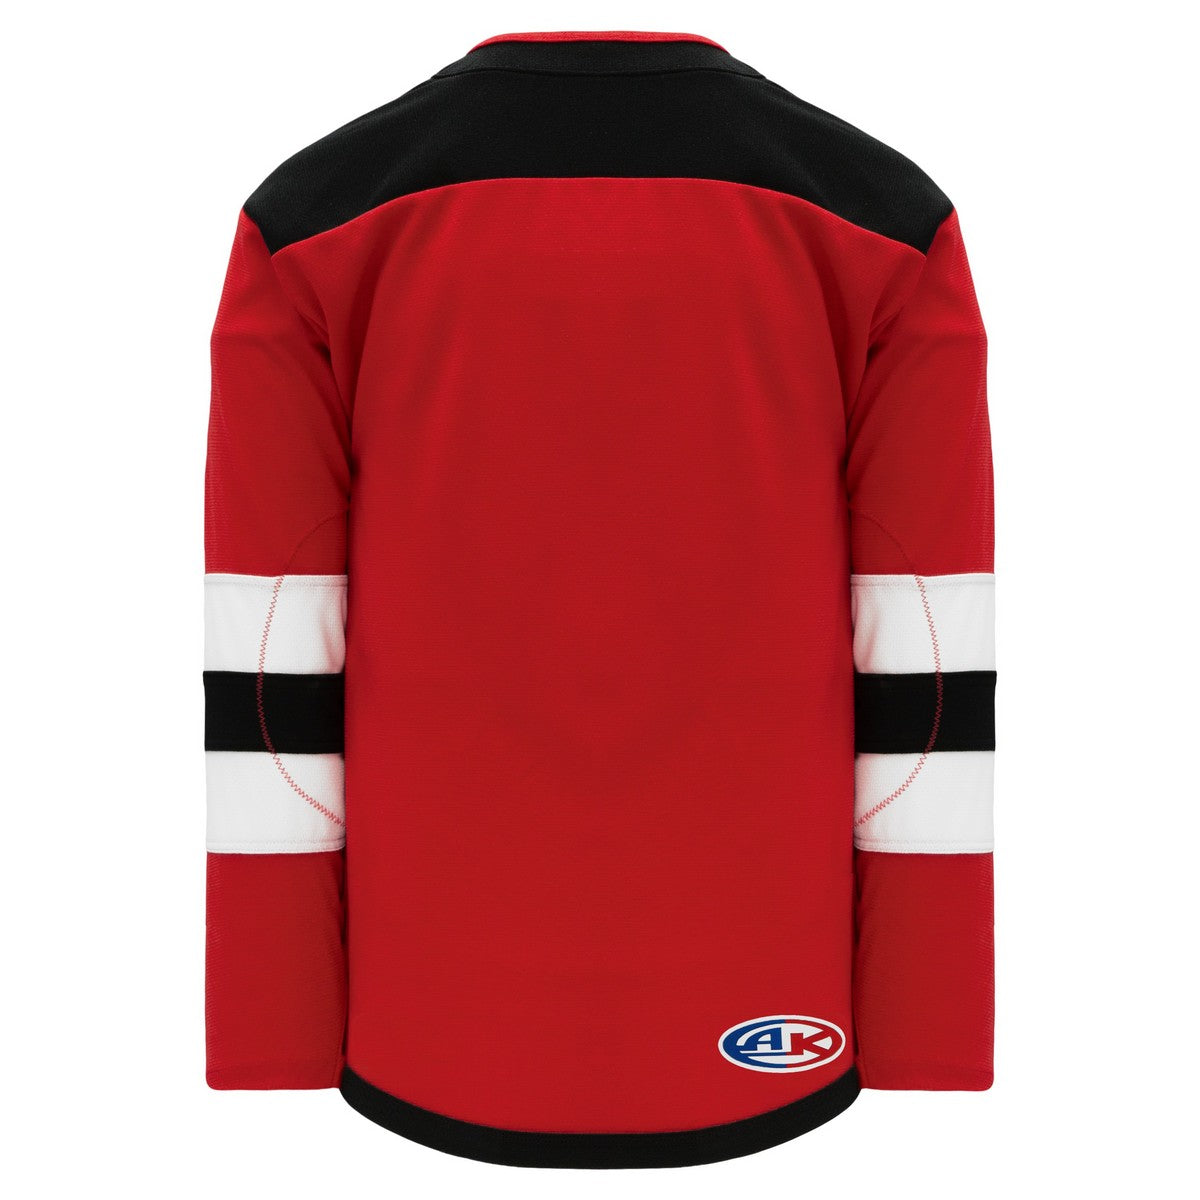 Replica Premier Style New Jersey Devils 2018 Red Hockey Jersey